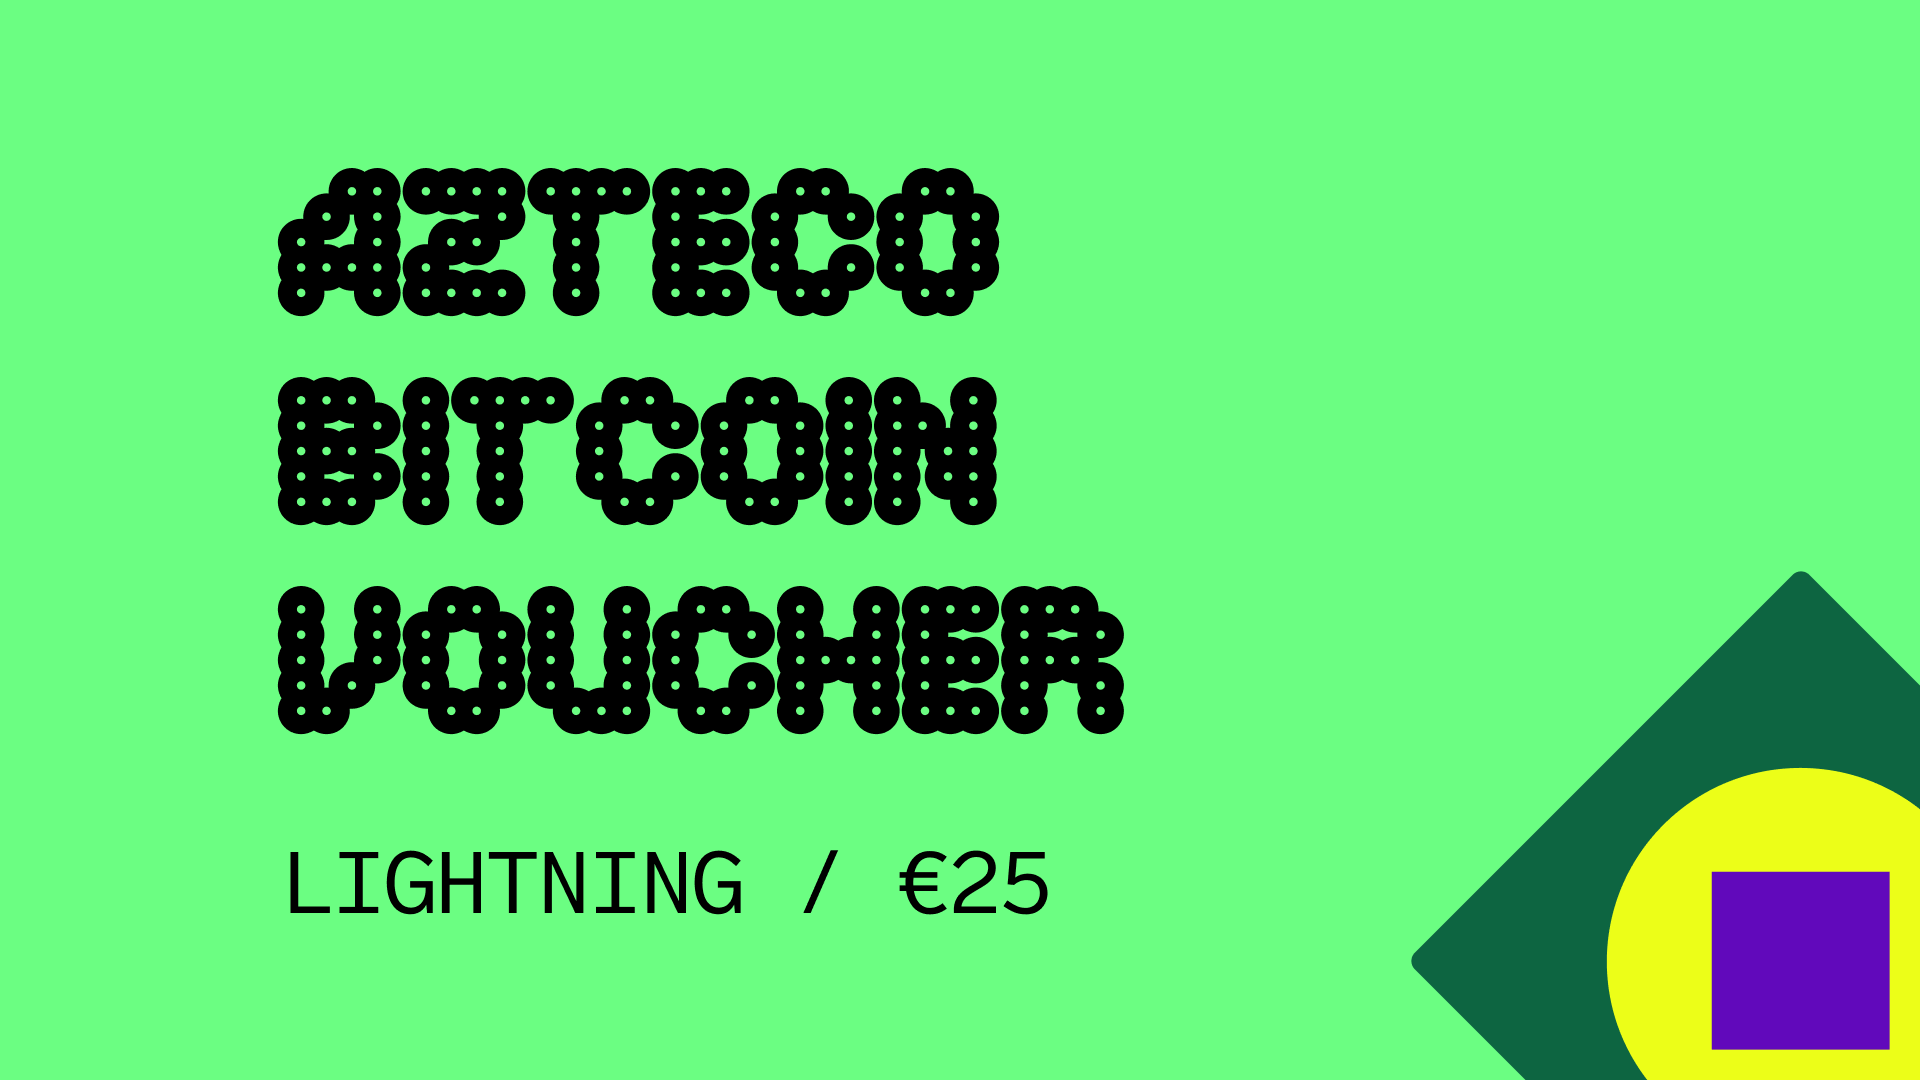 Azteco Bitcoin Lighting €25 Voucher [$ 28.25]